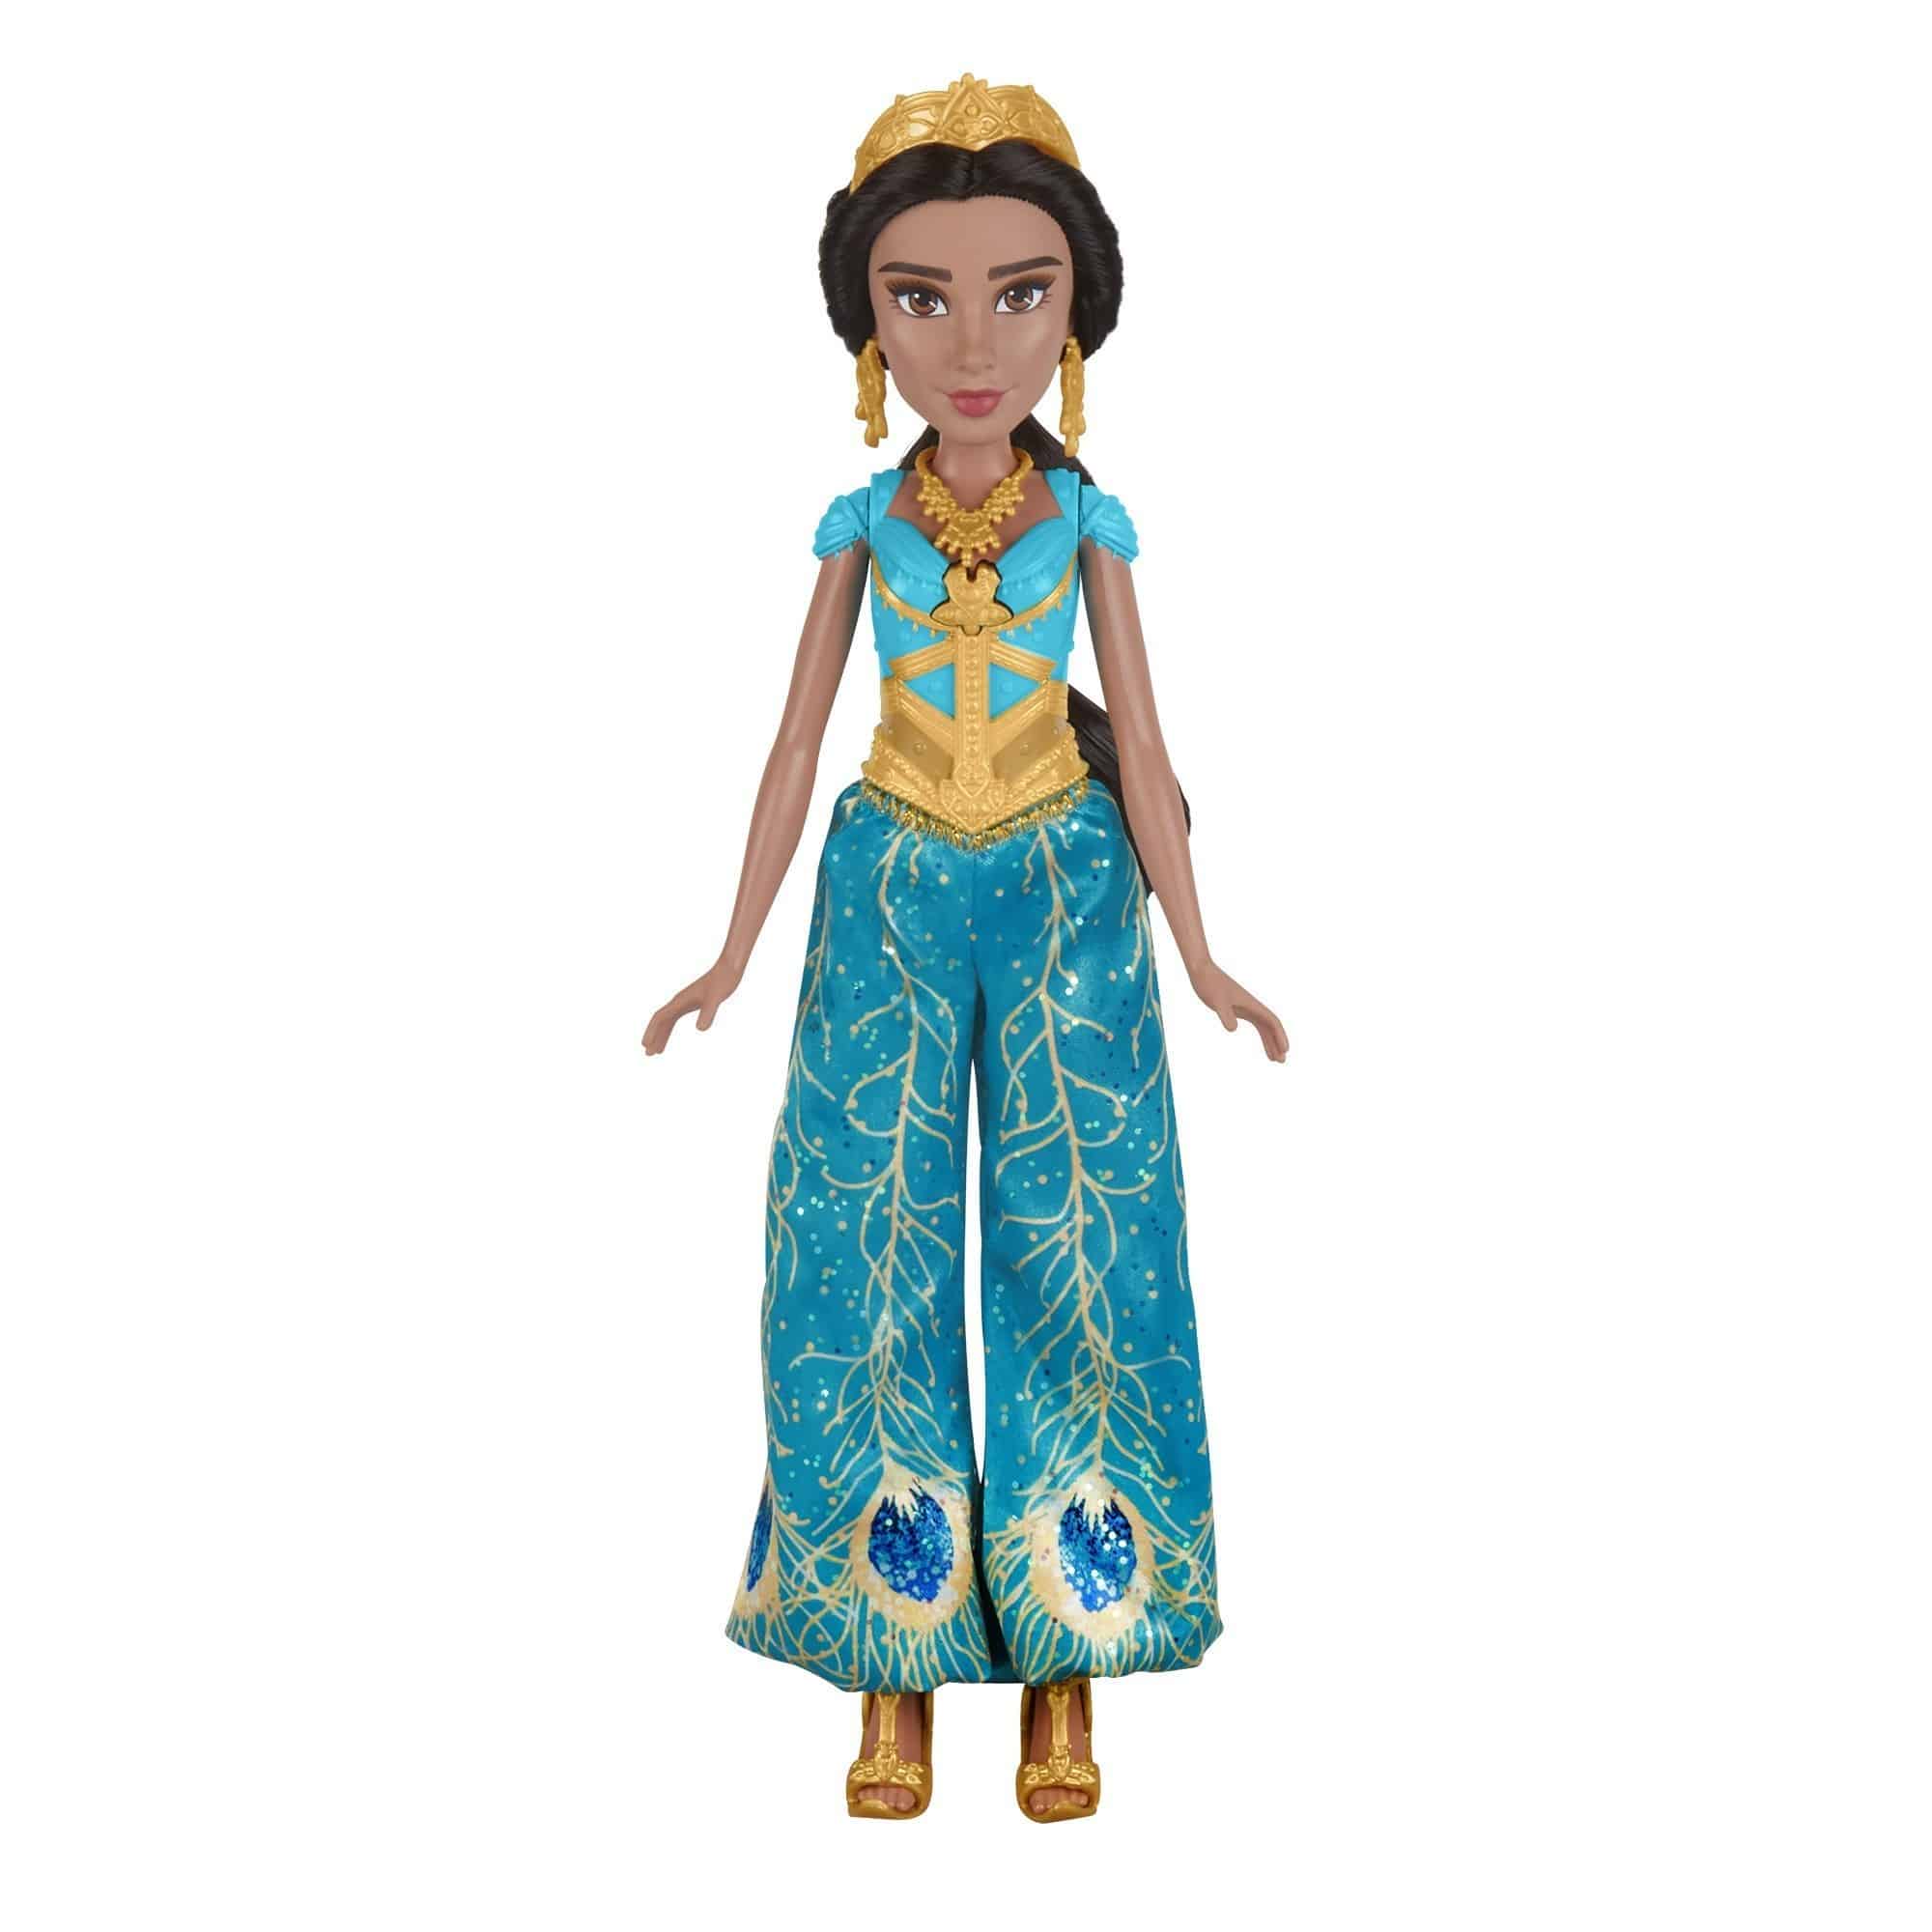 Disney Aladdin - A Whole New World Jasmine Doll